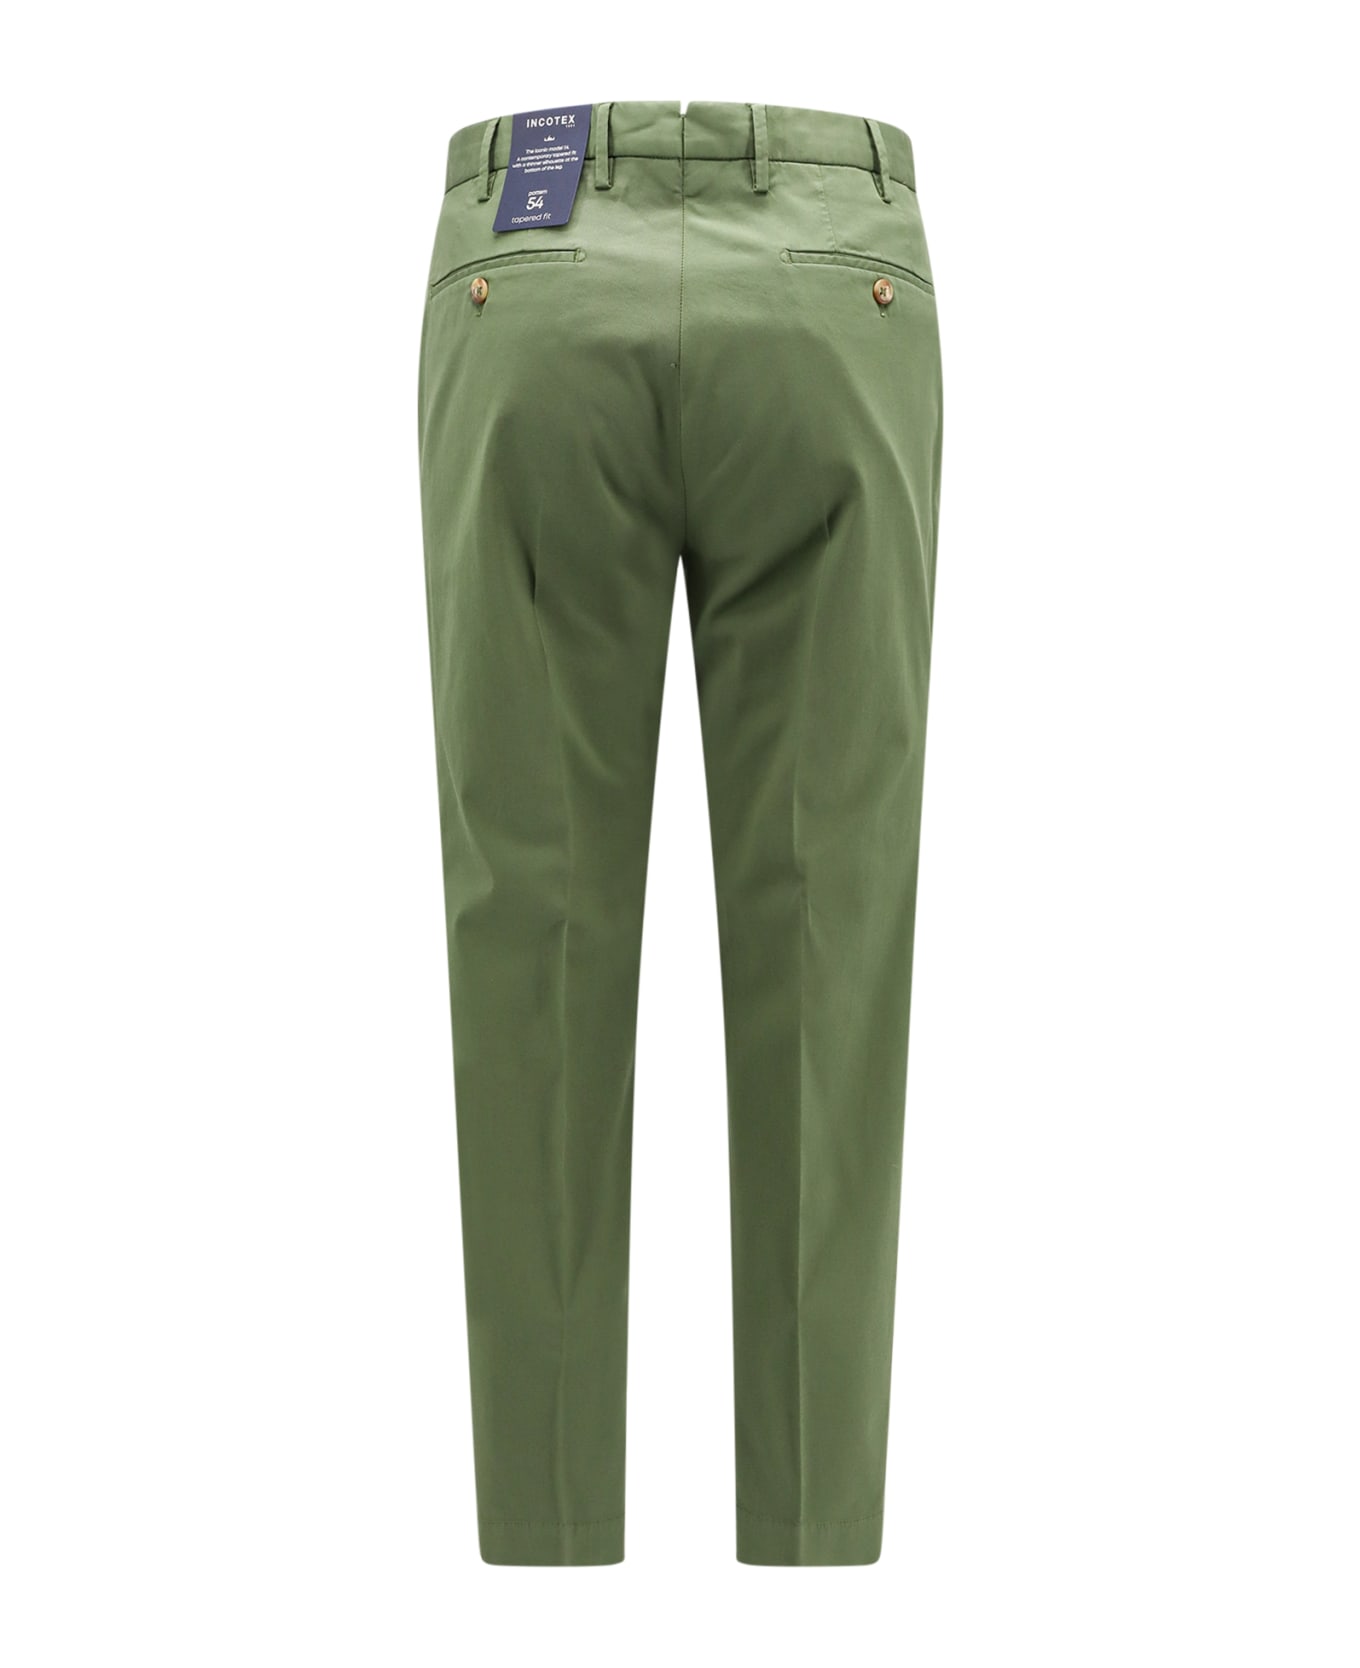 Incotex 54 Trouser - Green